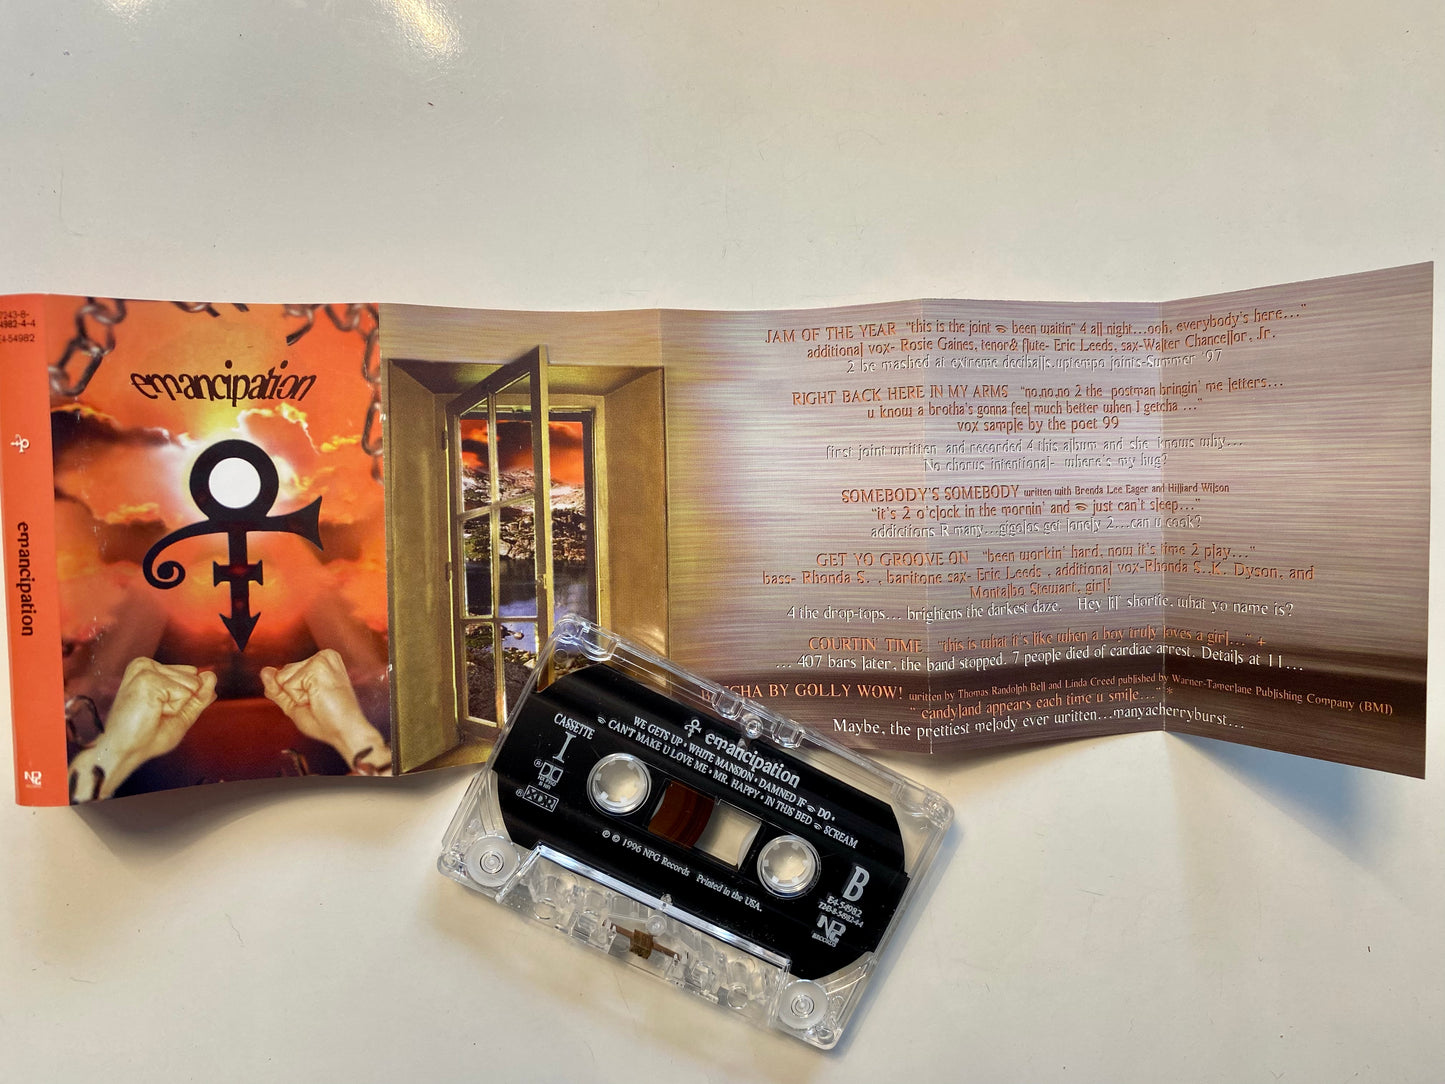 Prince, Emancipation cassette one